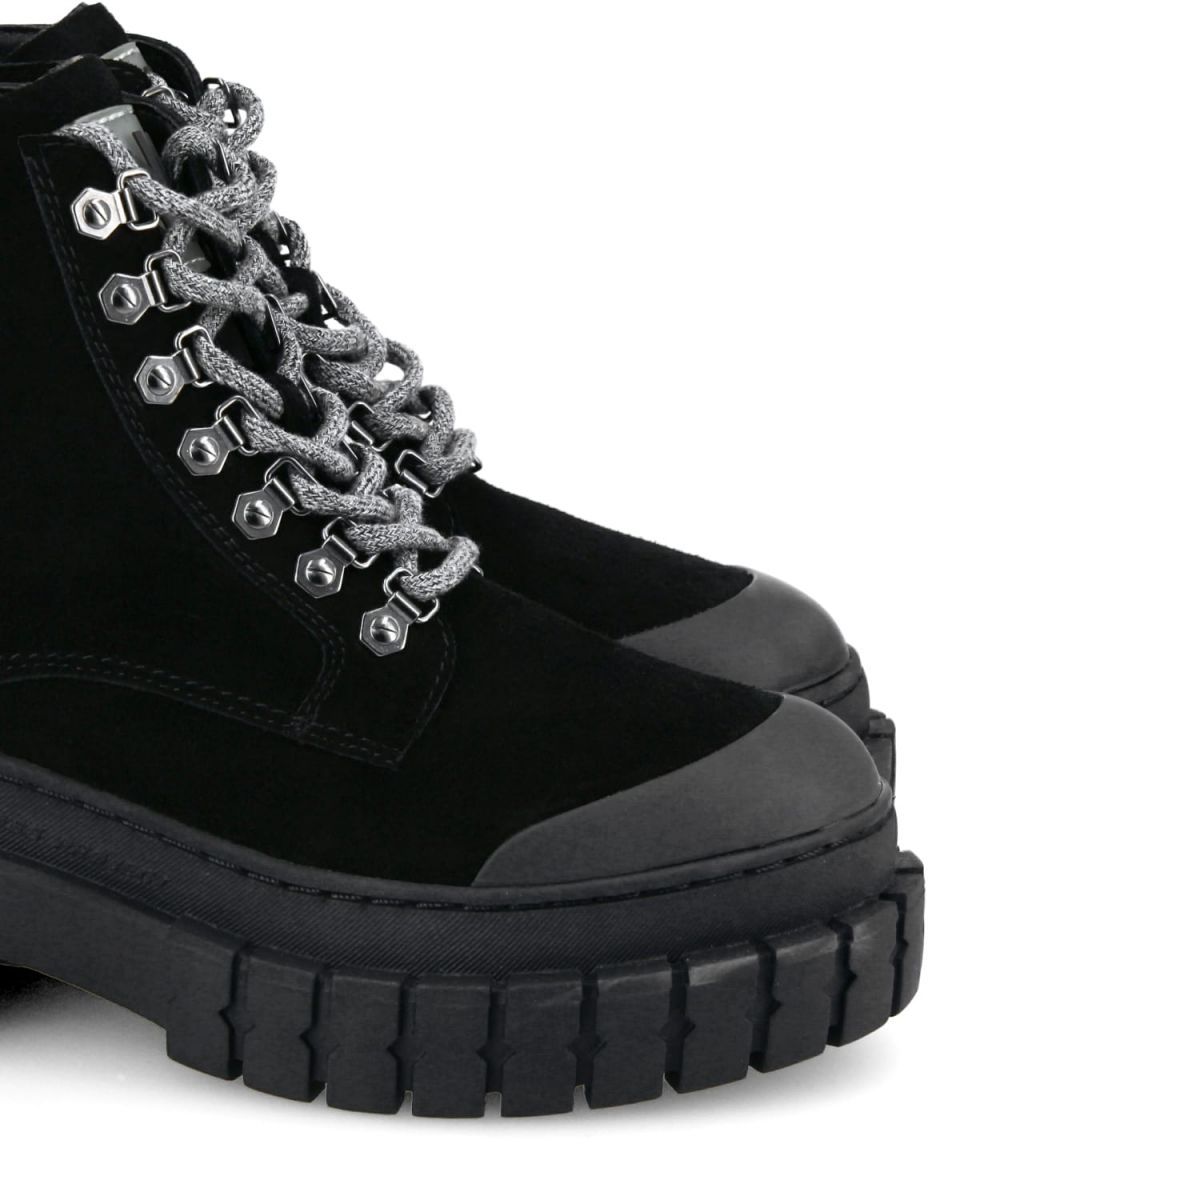 Kross Low Suede Black Boots KNXEVS0415 - 4